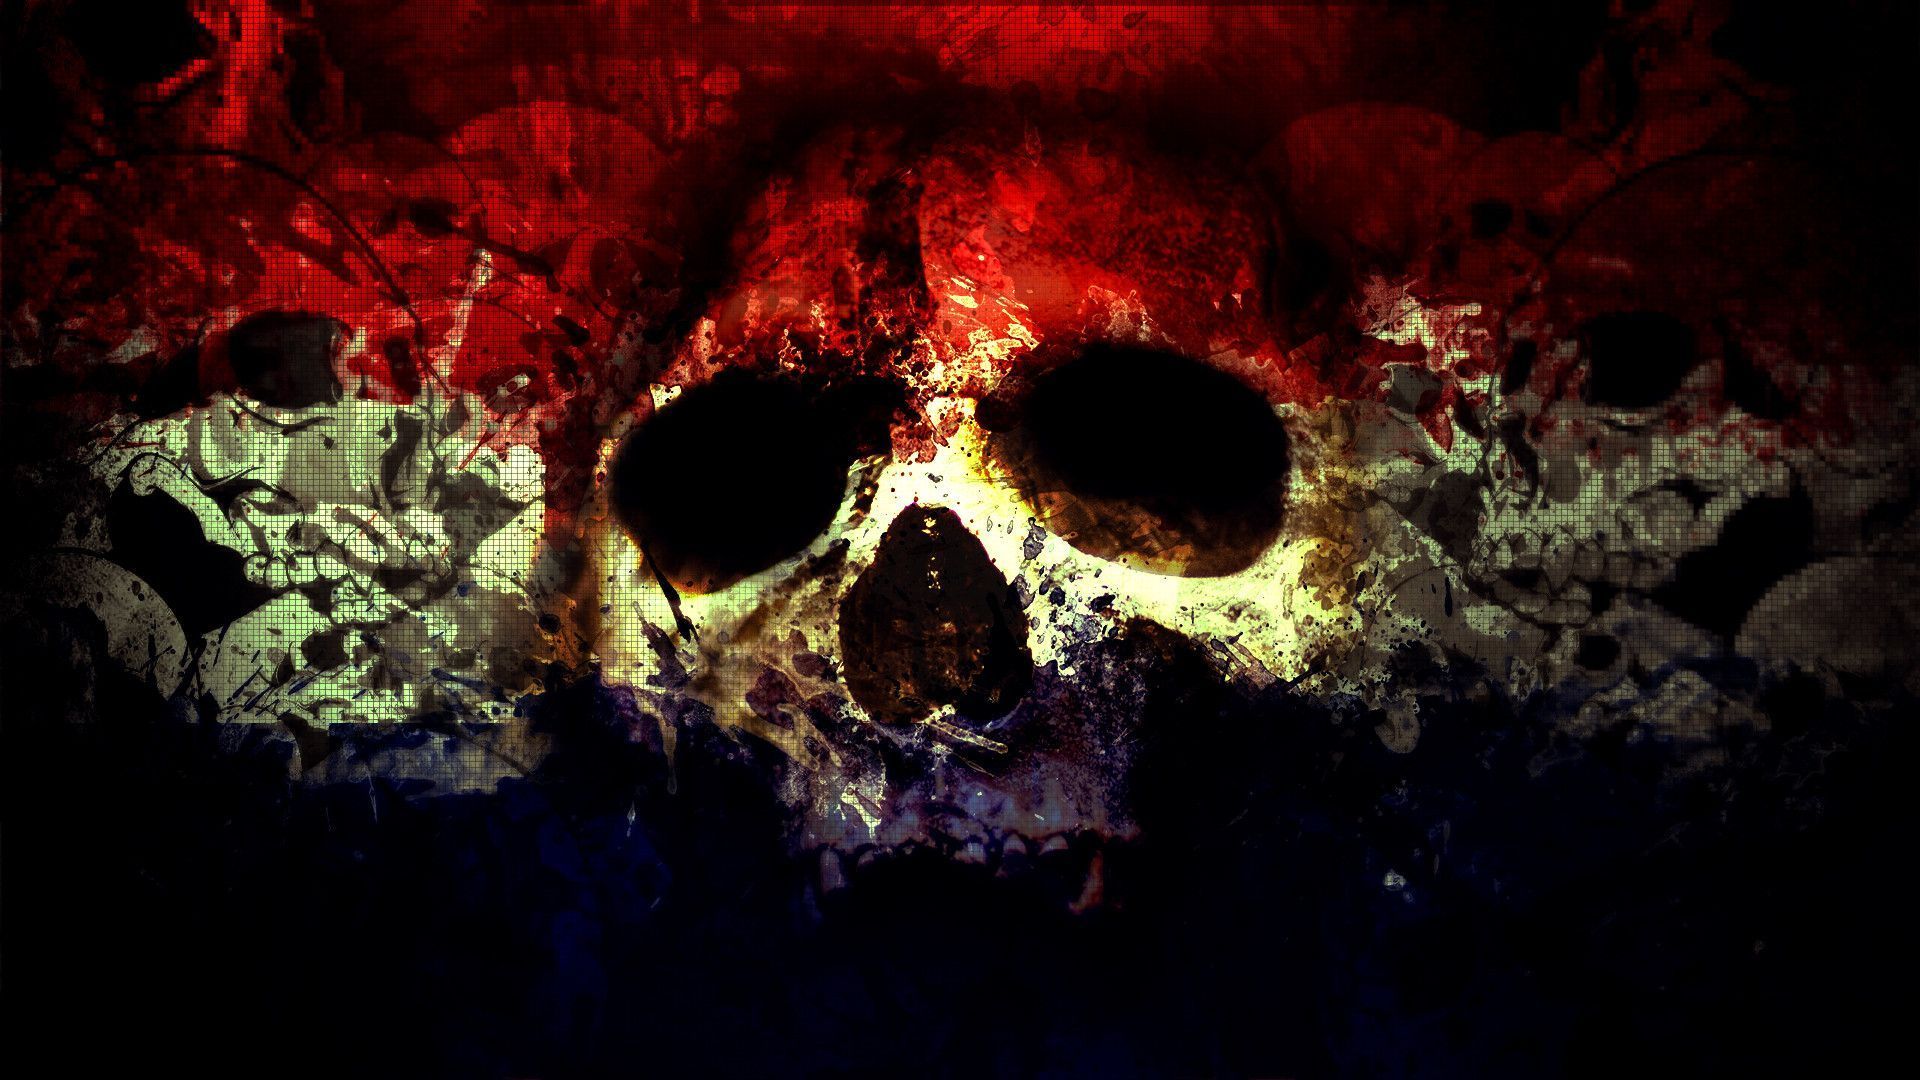 HD Skull Wallpapers - Wallpaper Cave